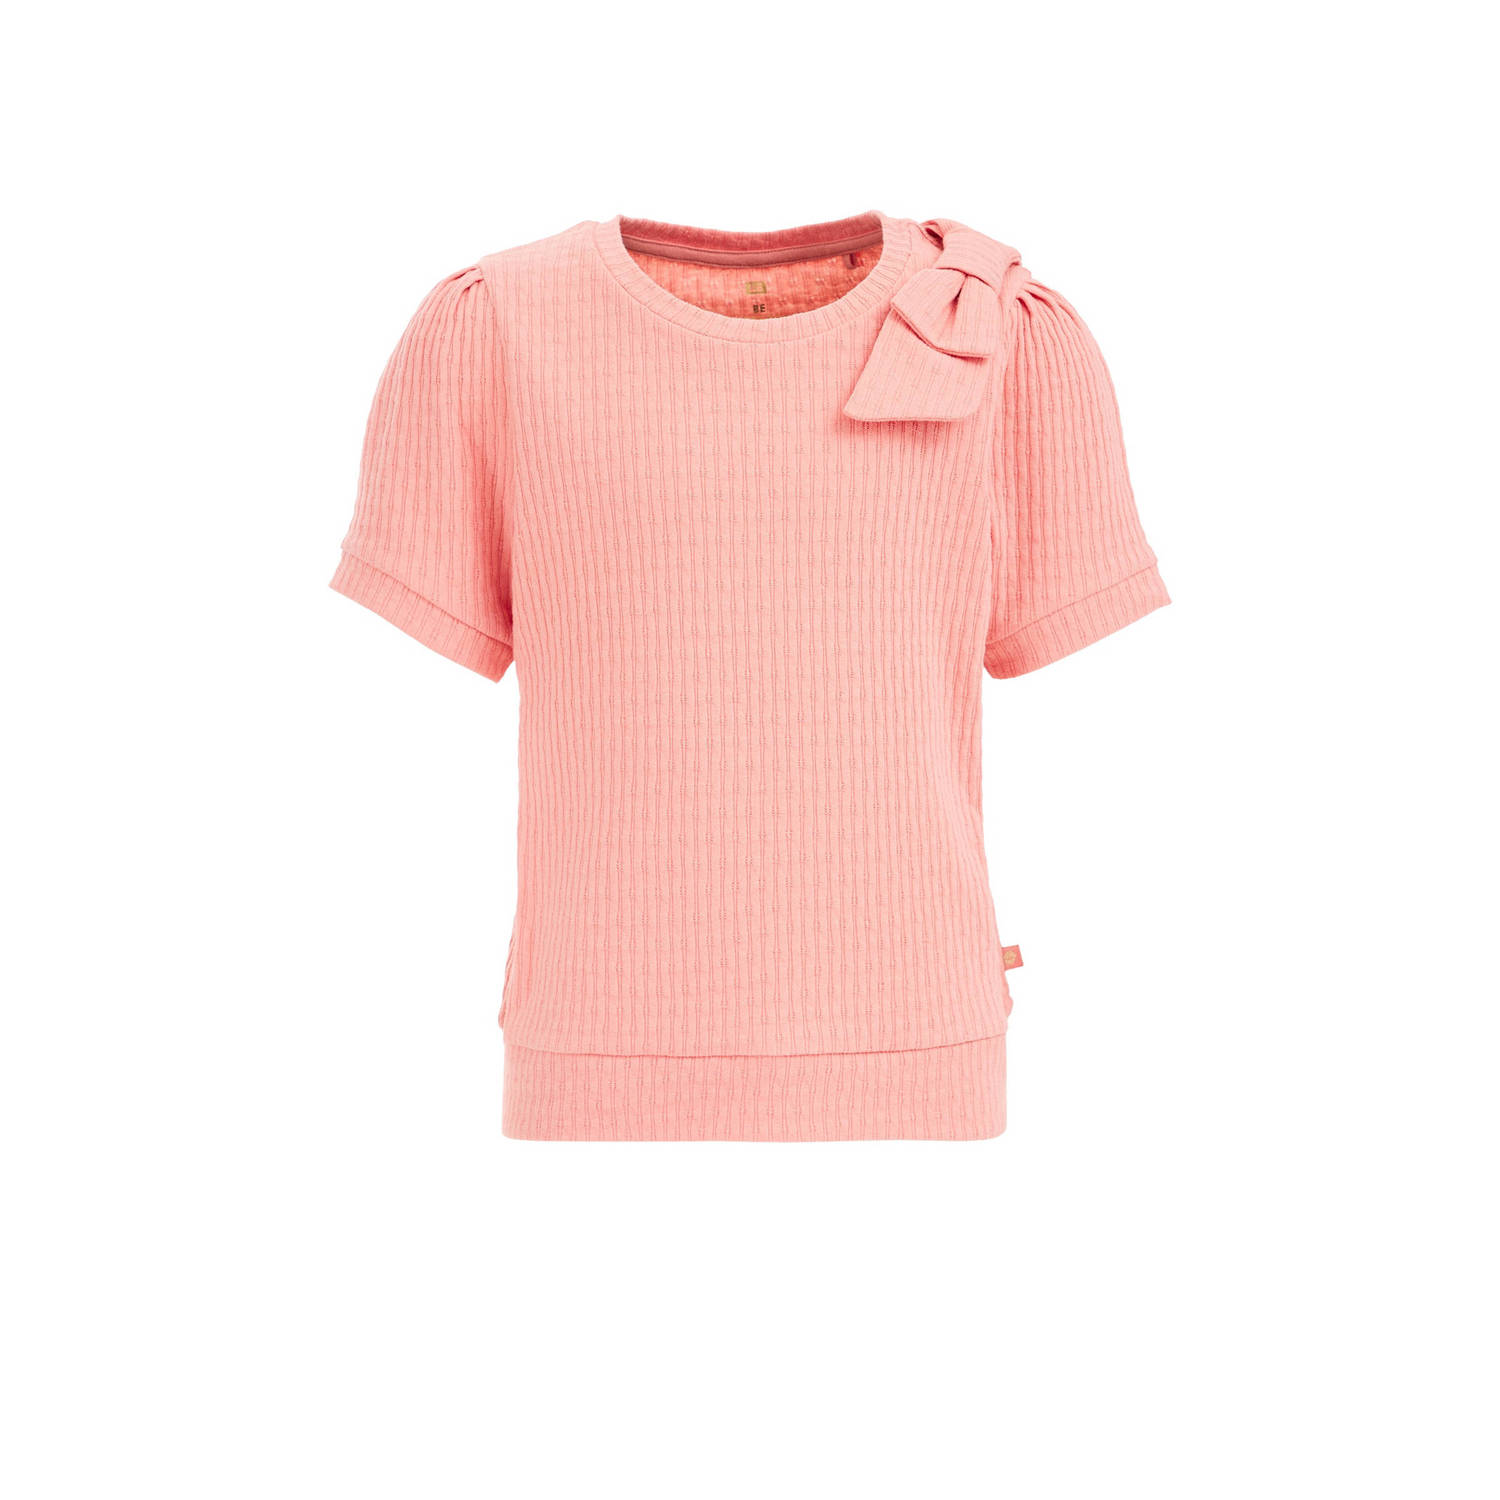 WE Fashion T-shirt zalm Roze Meisjes Katoen Ronde hals Effen 110 116